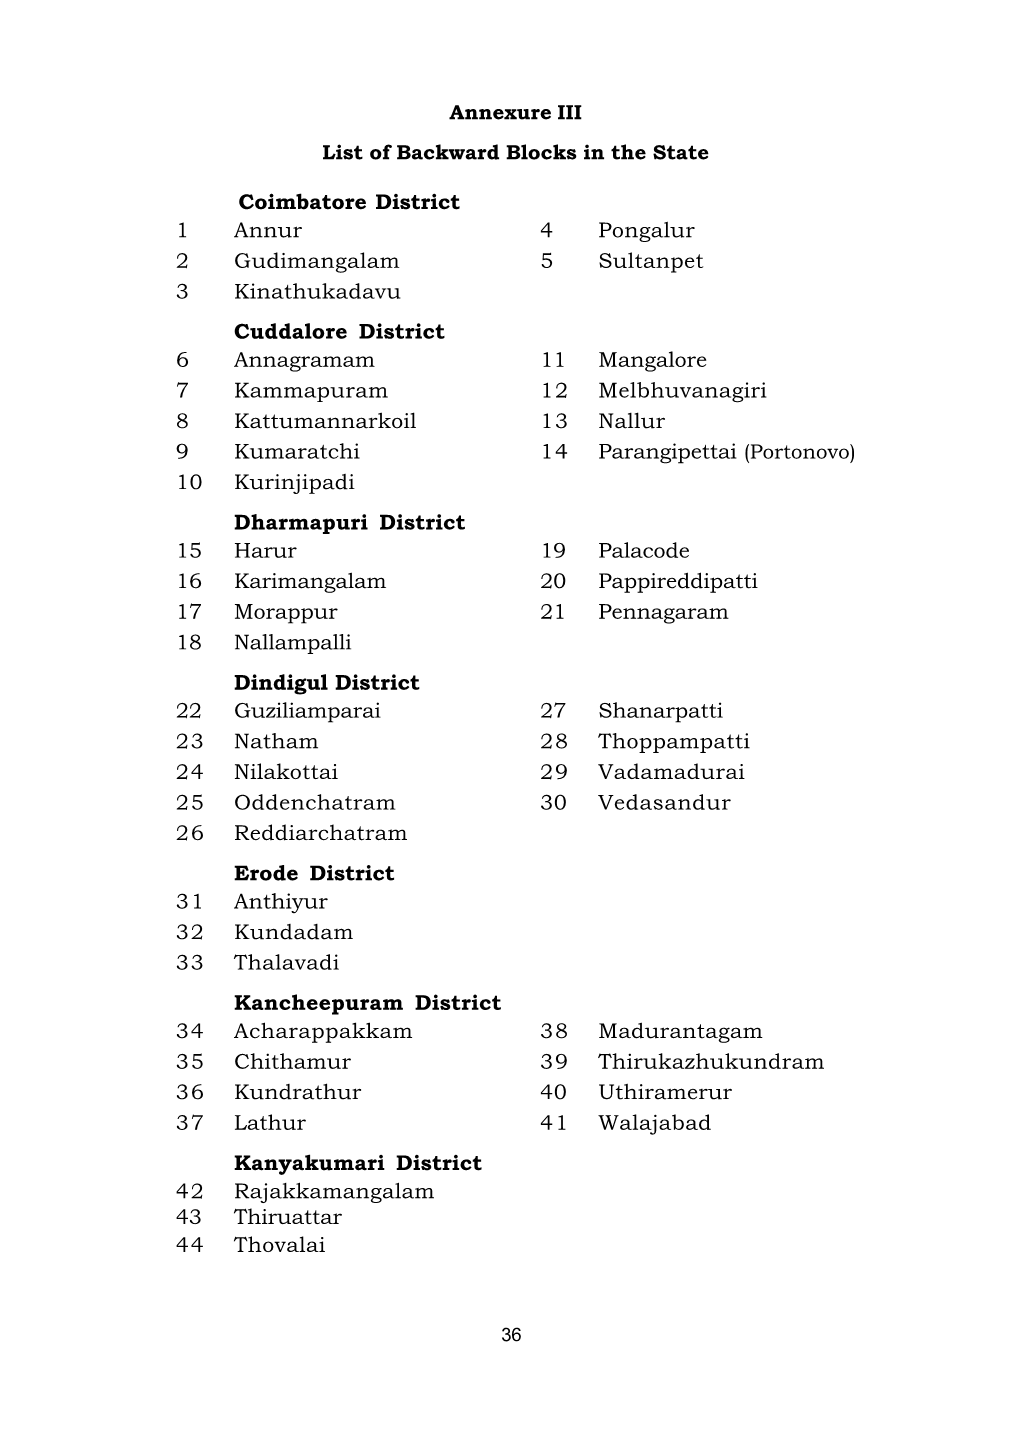 Annexure III List of Backward Blocks in the State Coimbatore District 1 Annur 4 Pongalur 2 Gudimangalam 5 Sultanpet 3 Kinathukad